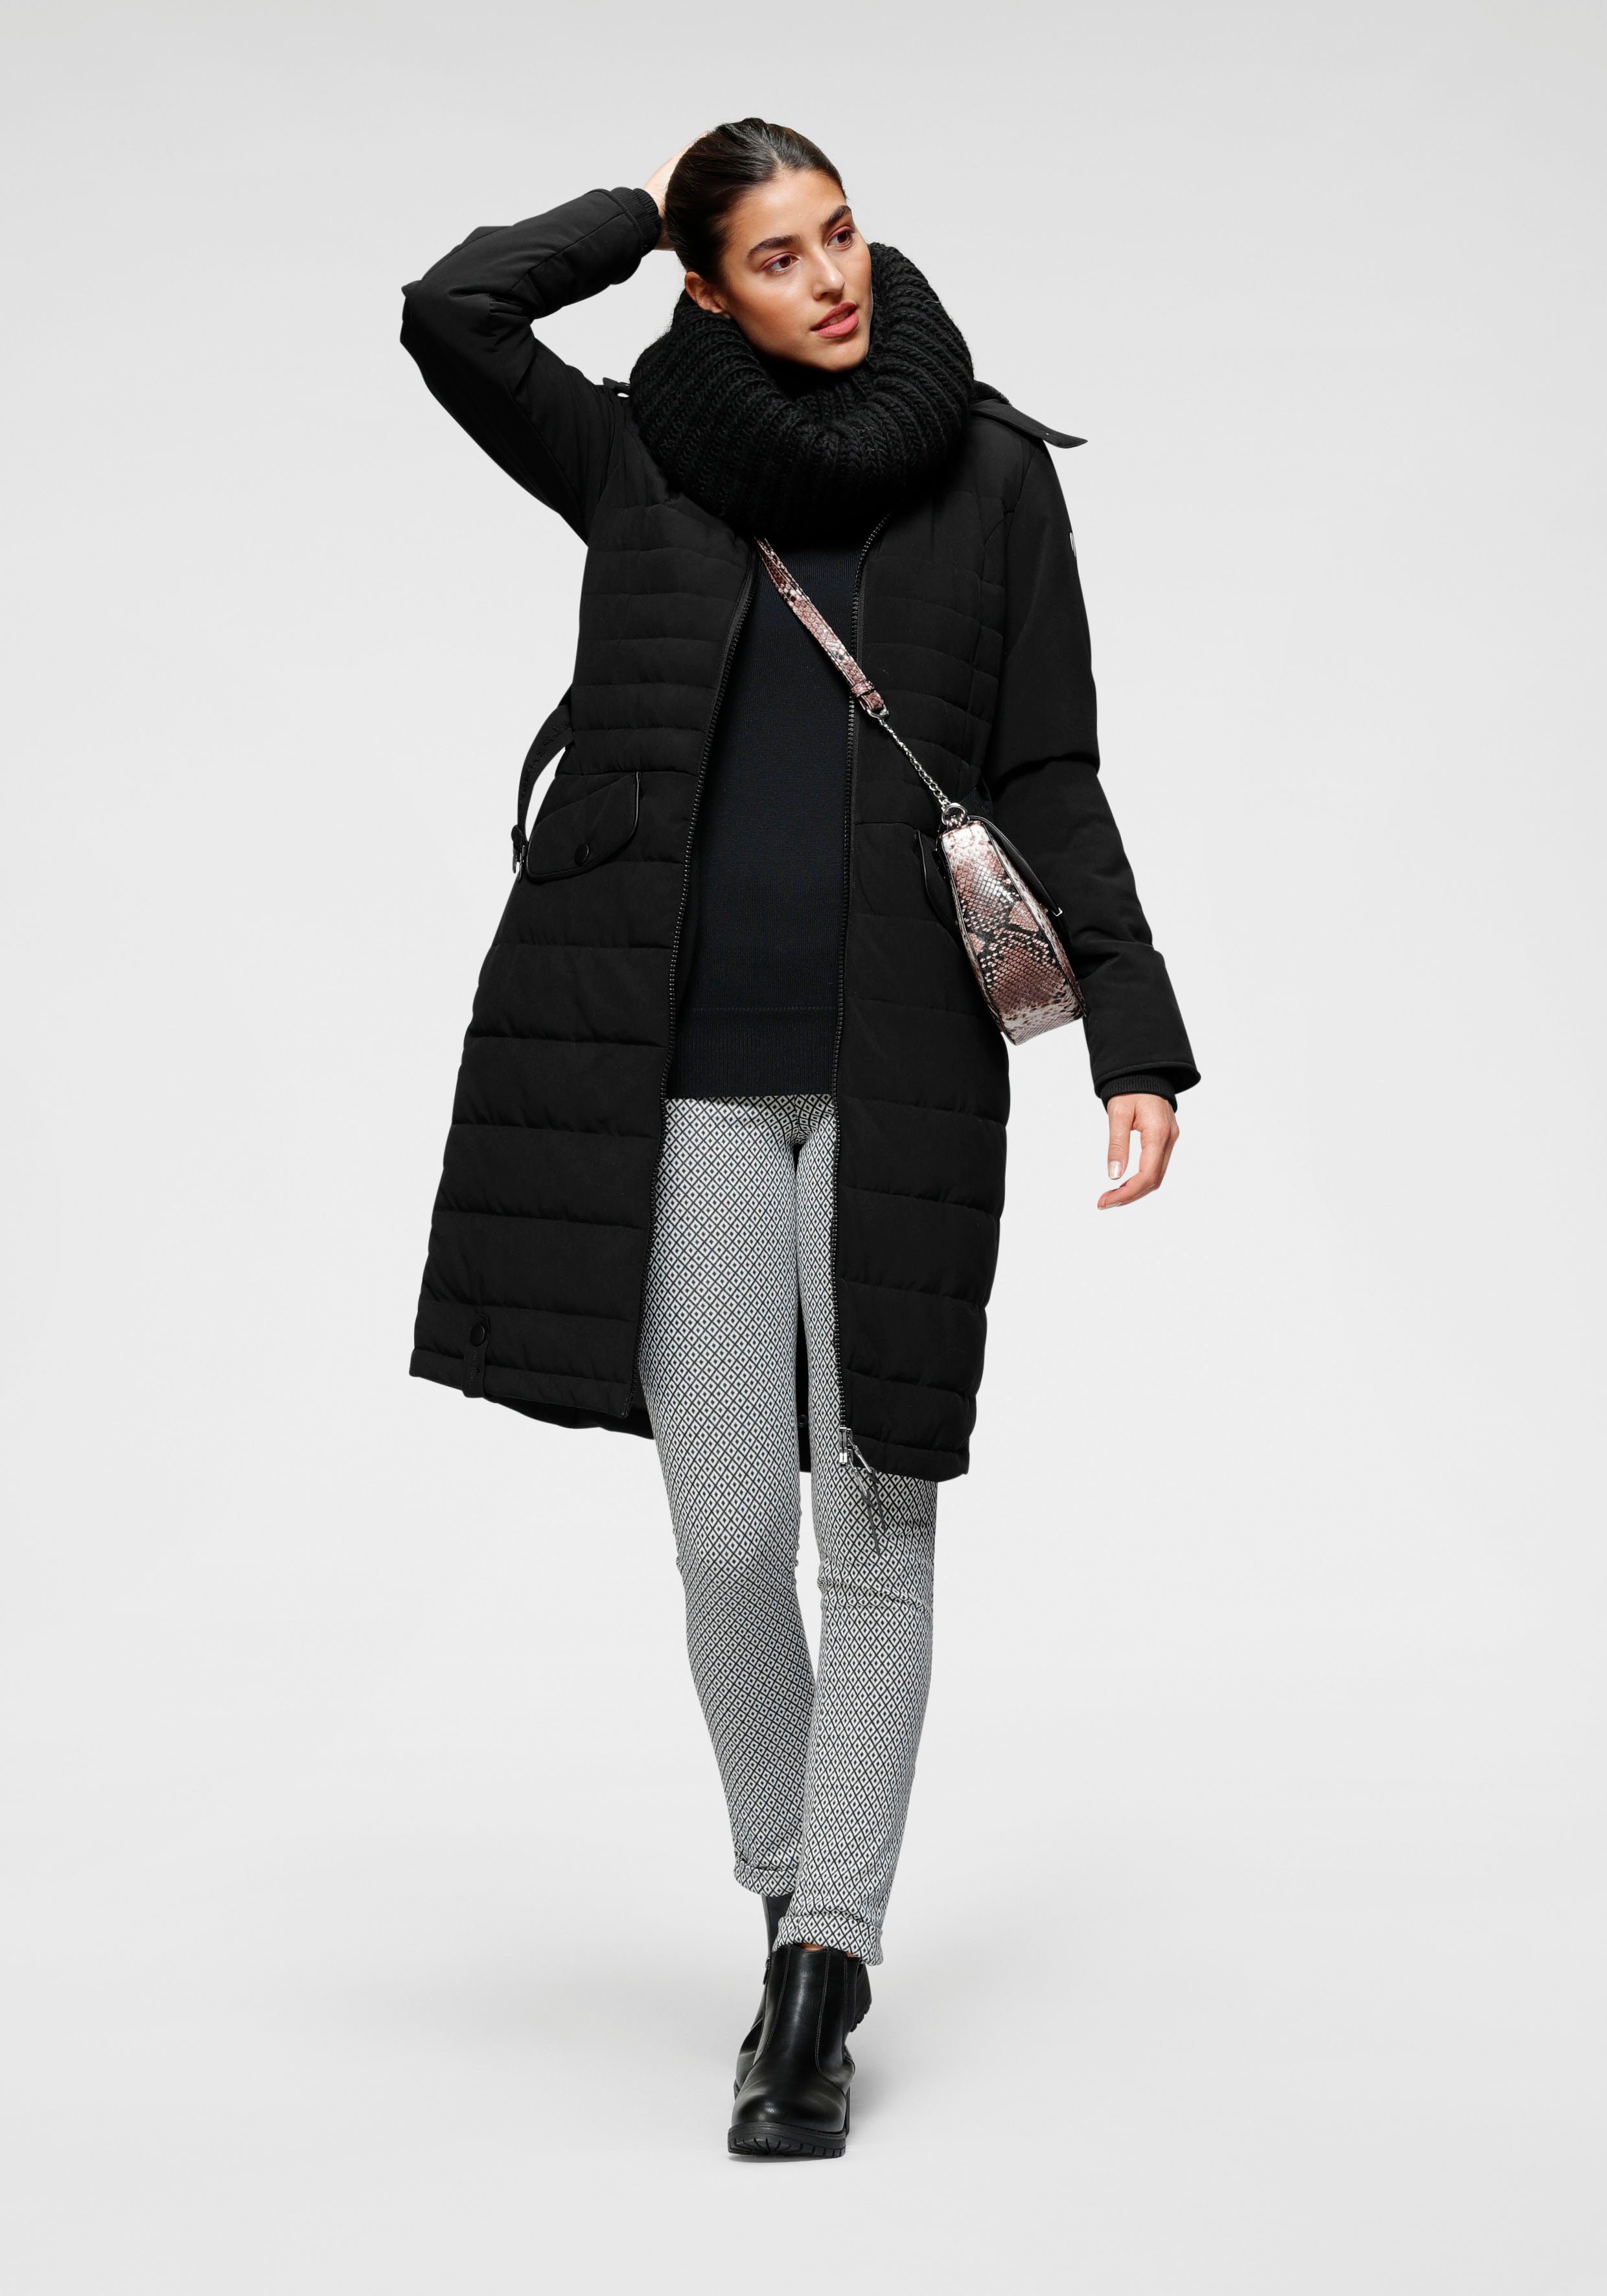 black Gürtel ALPENBLITZ Oslo nachhaltigem & Steppmantel long aus auf (Jacke abnehmbarer Kuschel-Kapuze dem Markenprägung Material) Mantel mit